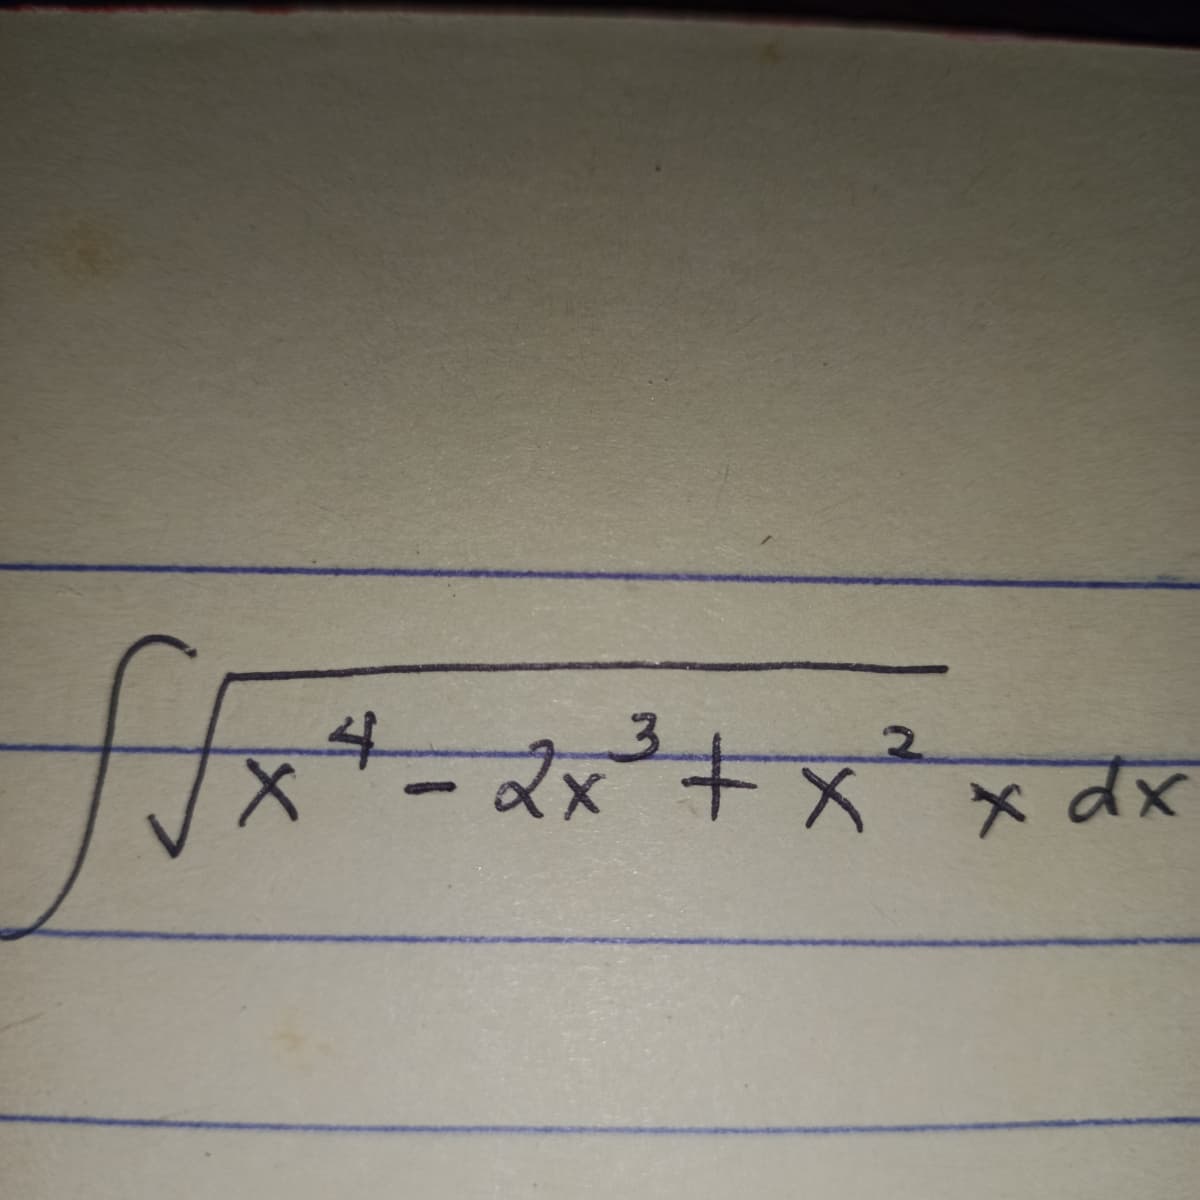 2x²+x²
x dx
